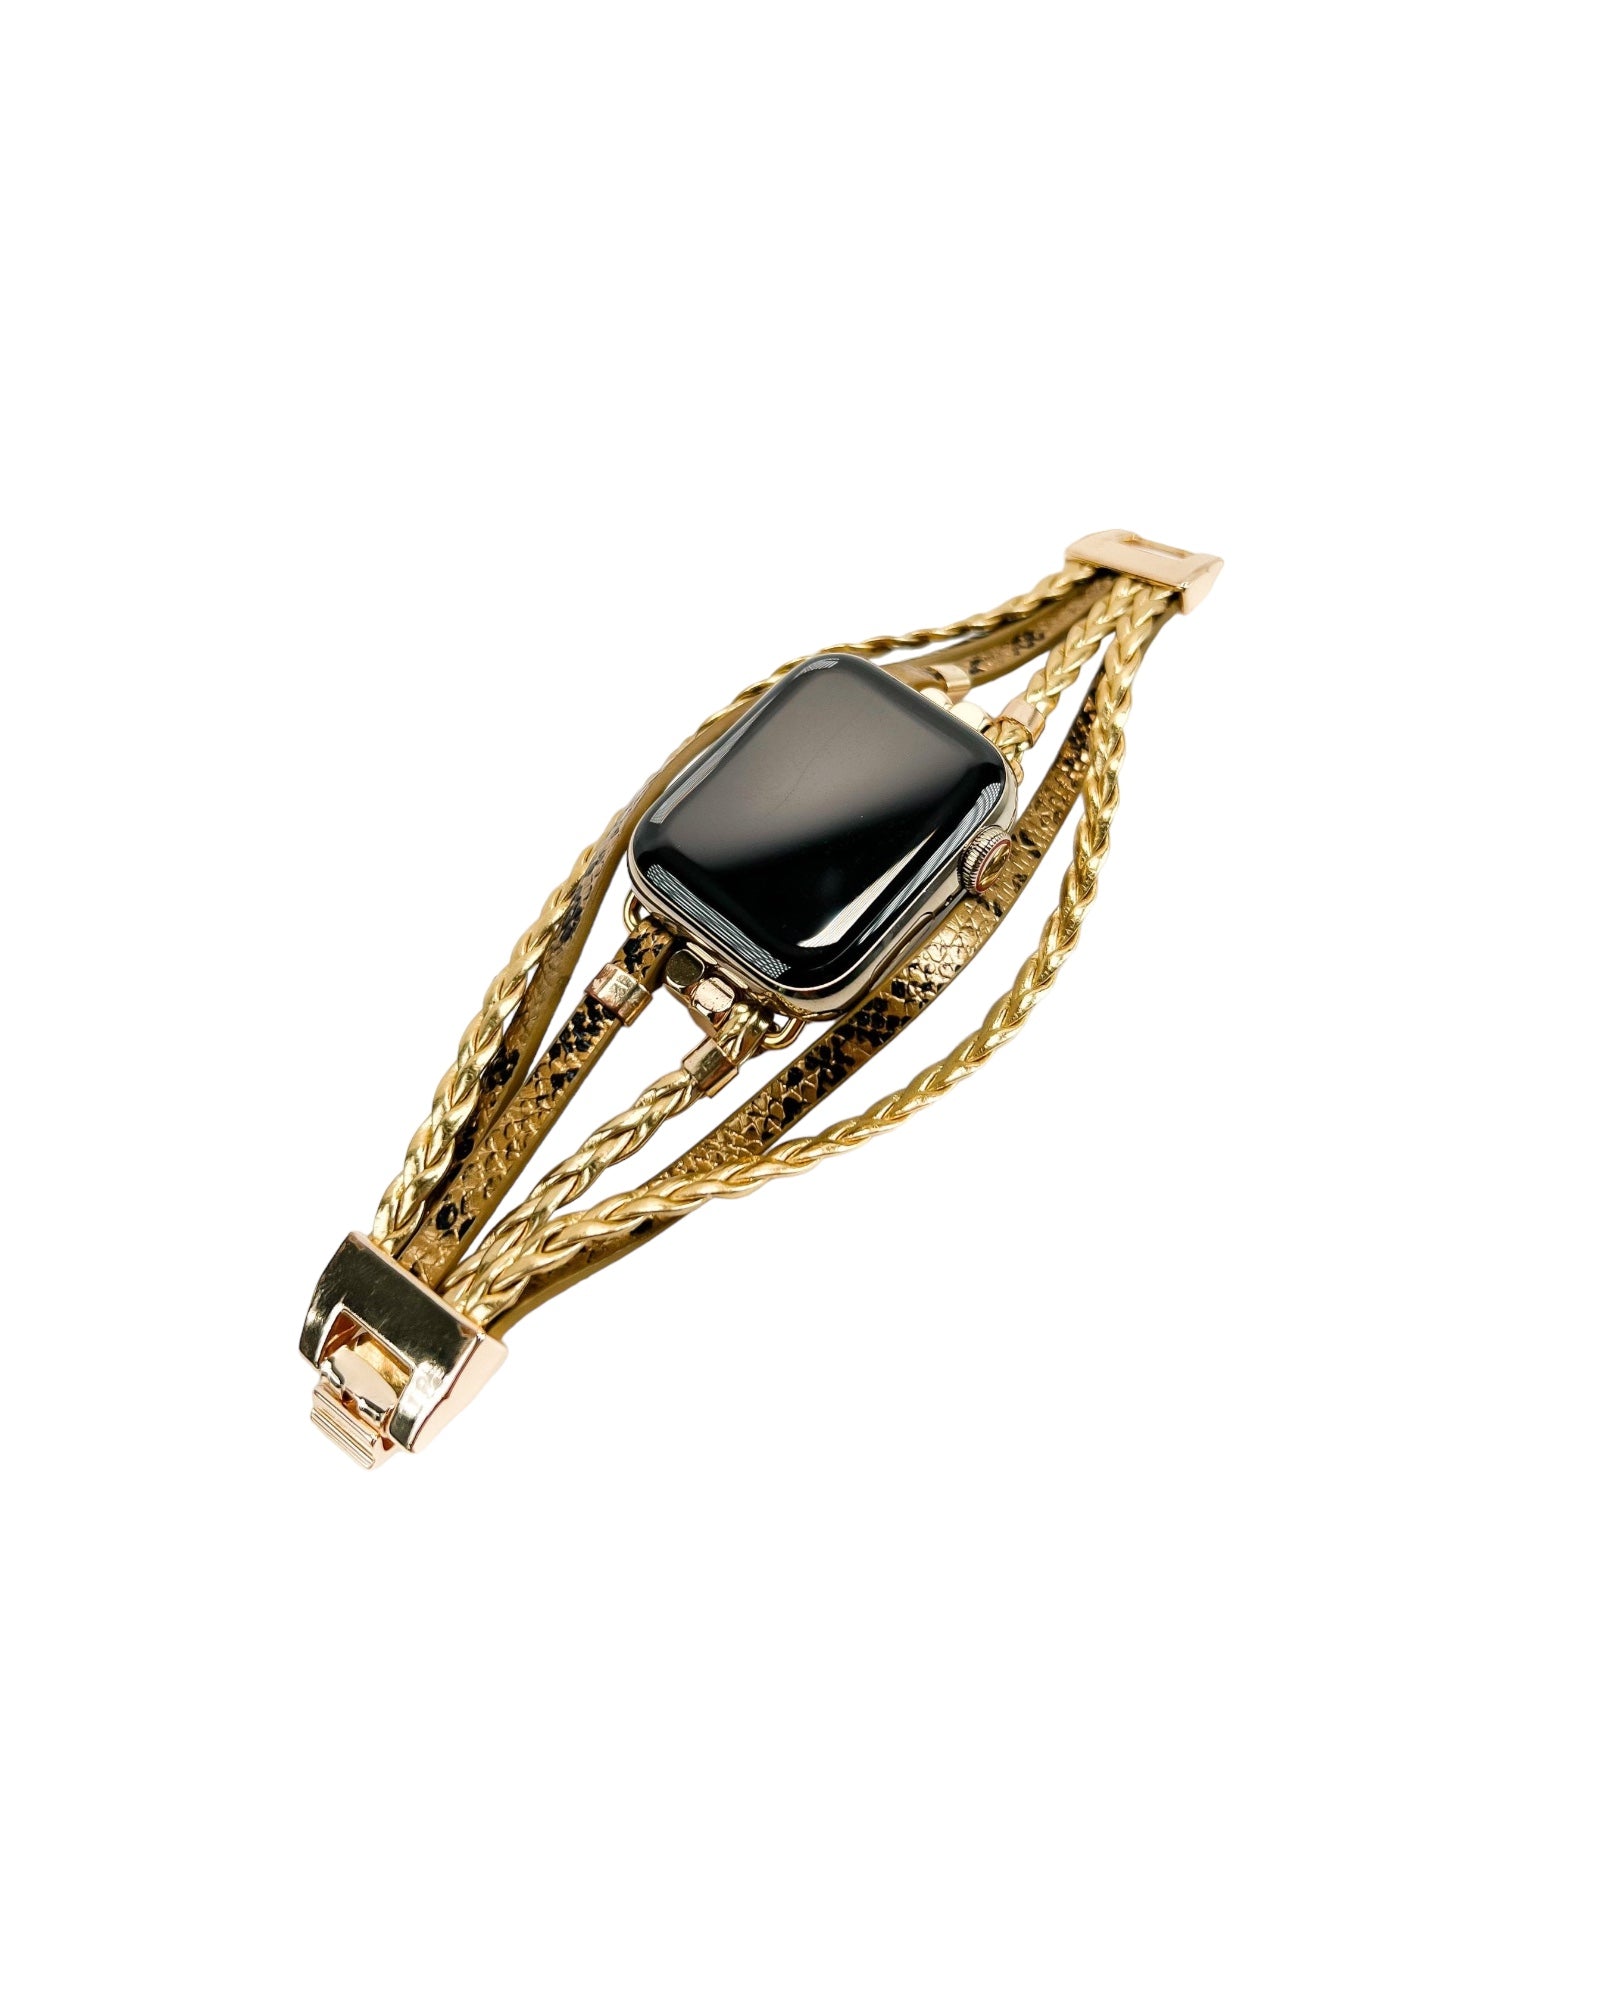 Posh Chic Gold Snake Watch Bracelet Band